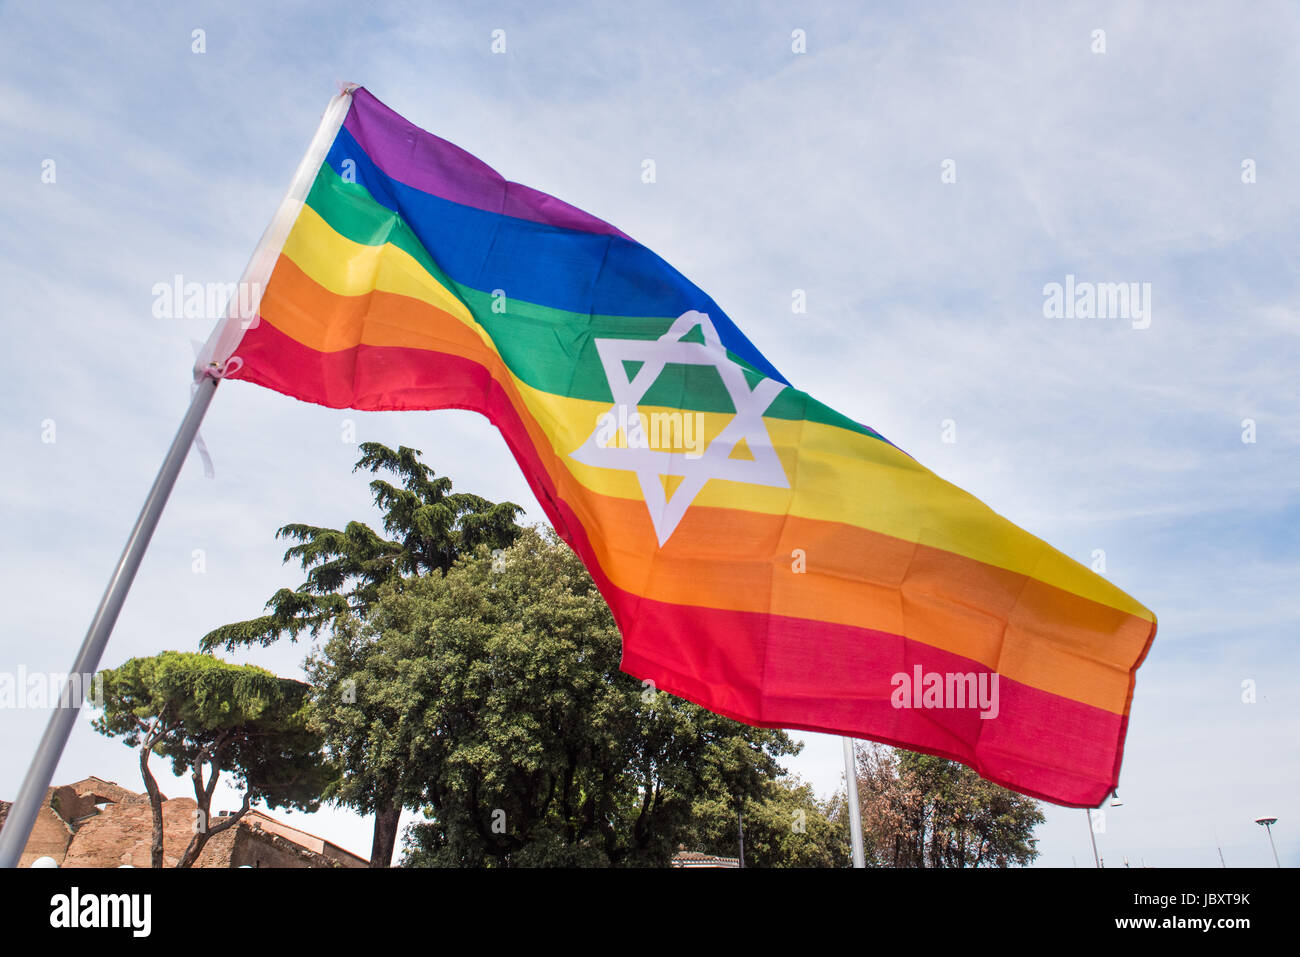 Peace rainbow flag -Fotos und -Bildmaterial in hoher Auflösung – Alamy